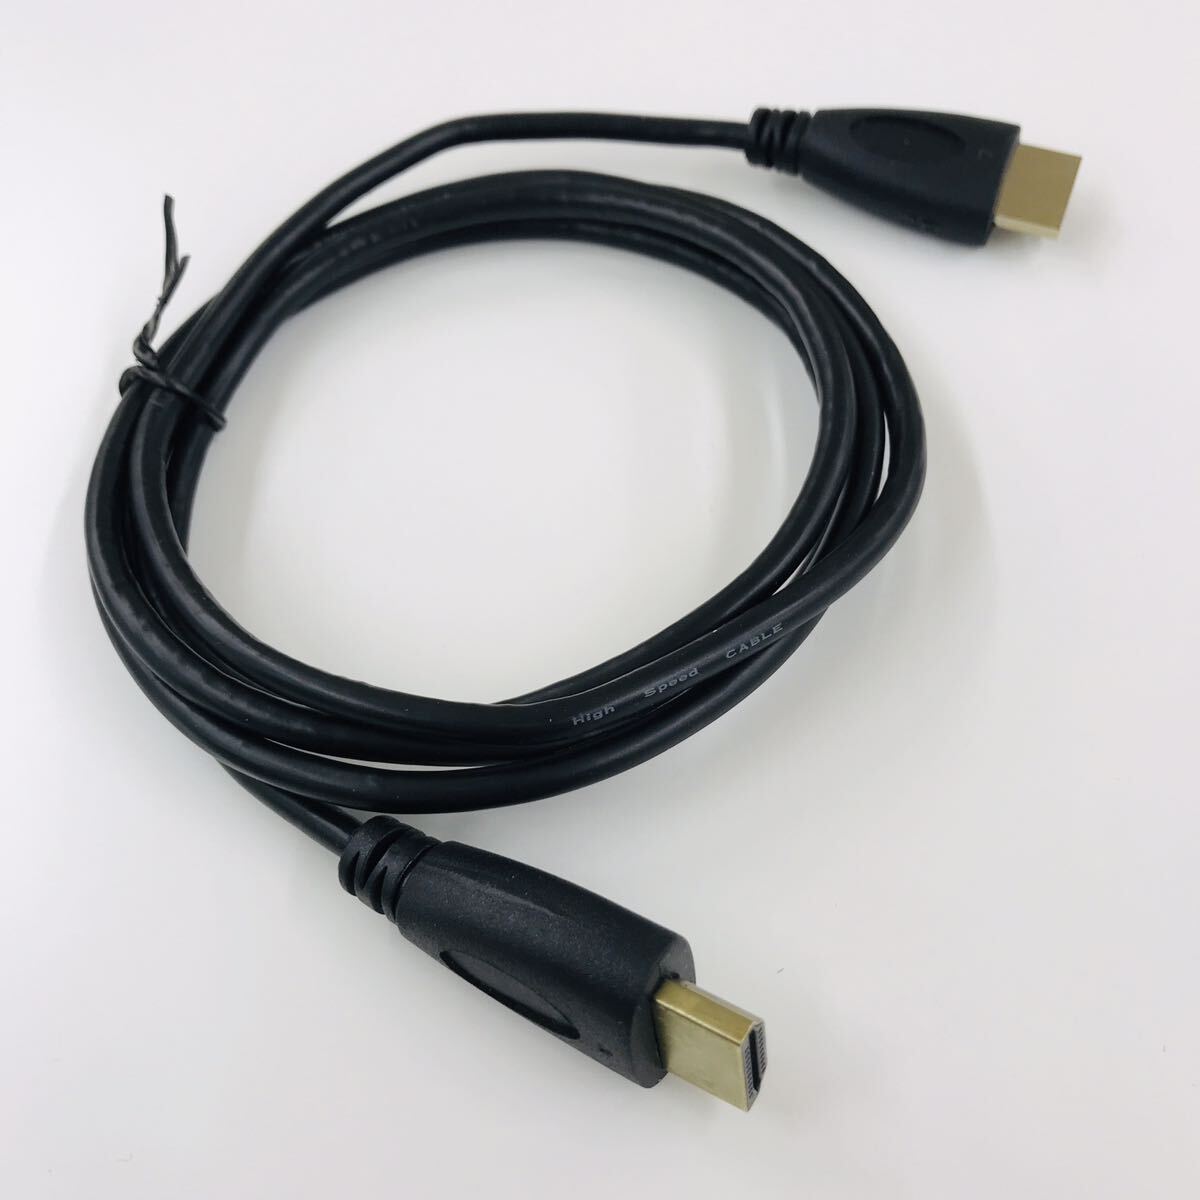  【INVAVO】 PS2 コンバーター HDMI接続コネクター HDMI COVERTER (USBケーブル＋HDMIケーブル＋日本語取扱説明書付き)_画像8